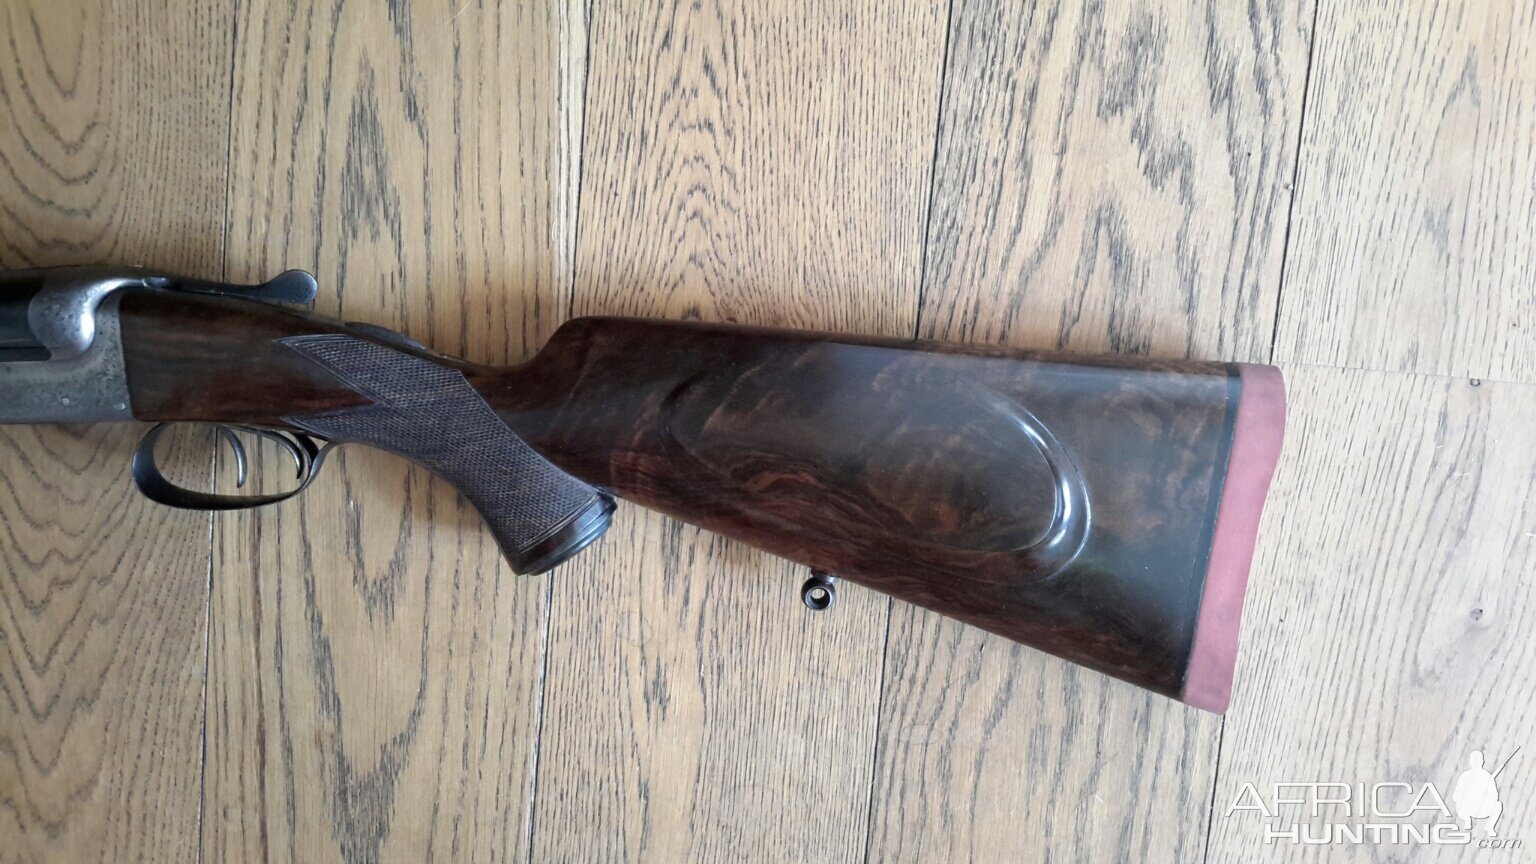 My .475 double rifle, now restocked in turkish walnut